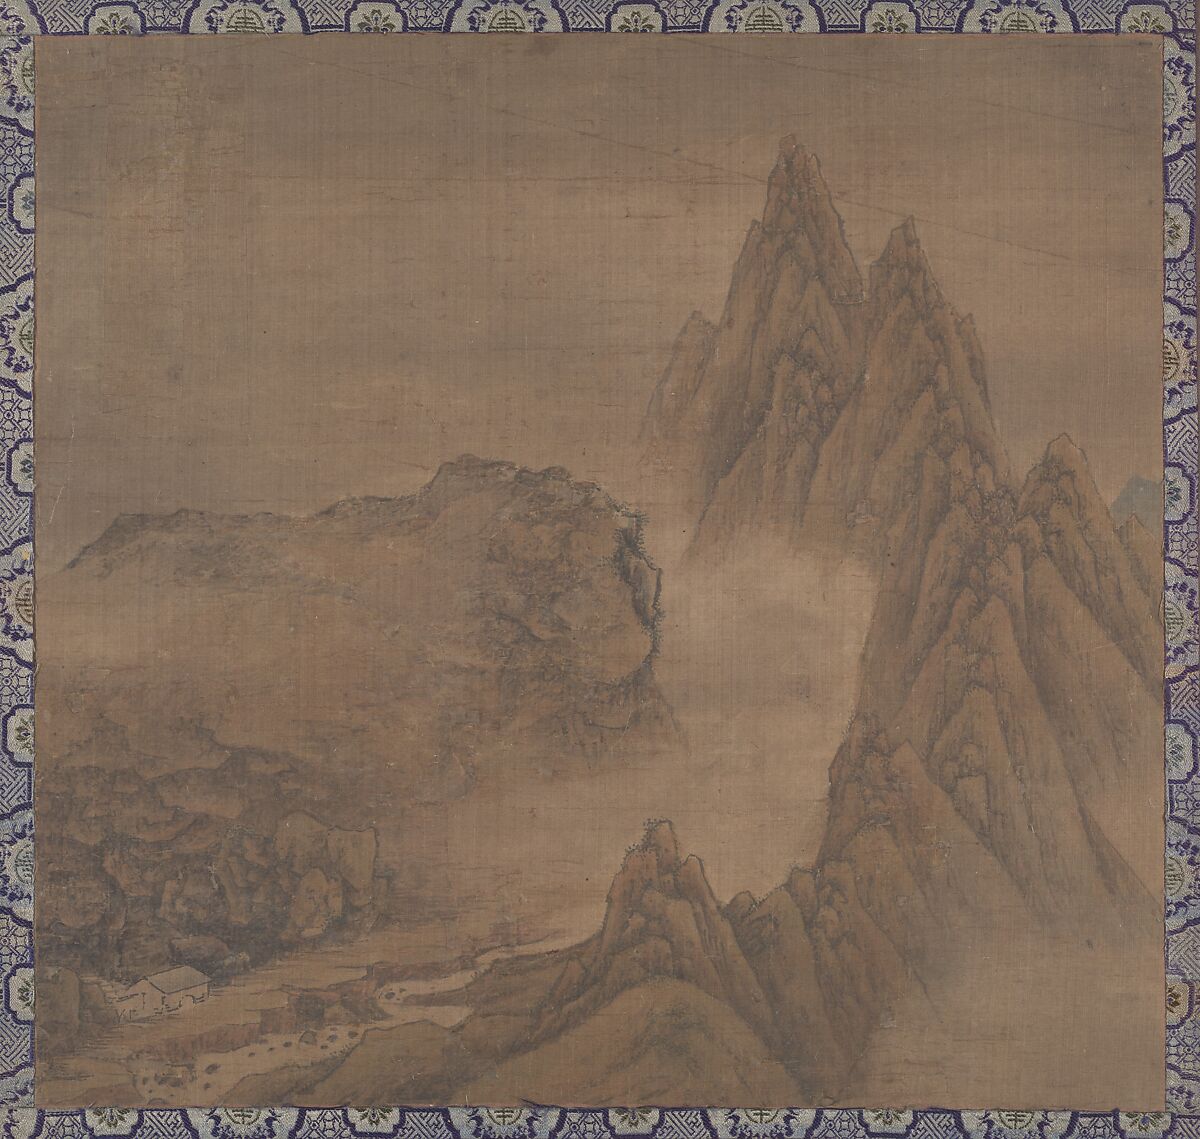 Landscape, Unidentified artist, Album leaf; ink and color on silk, China 